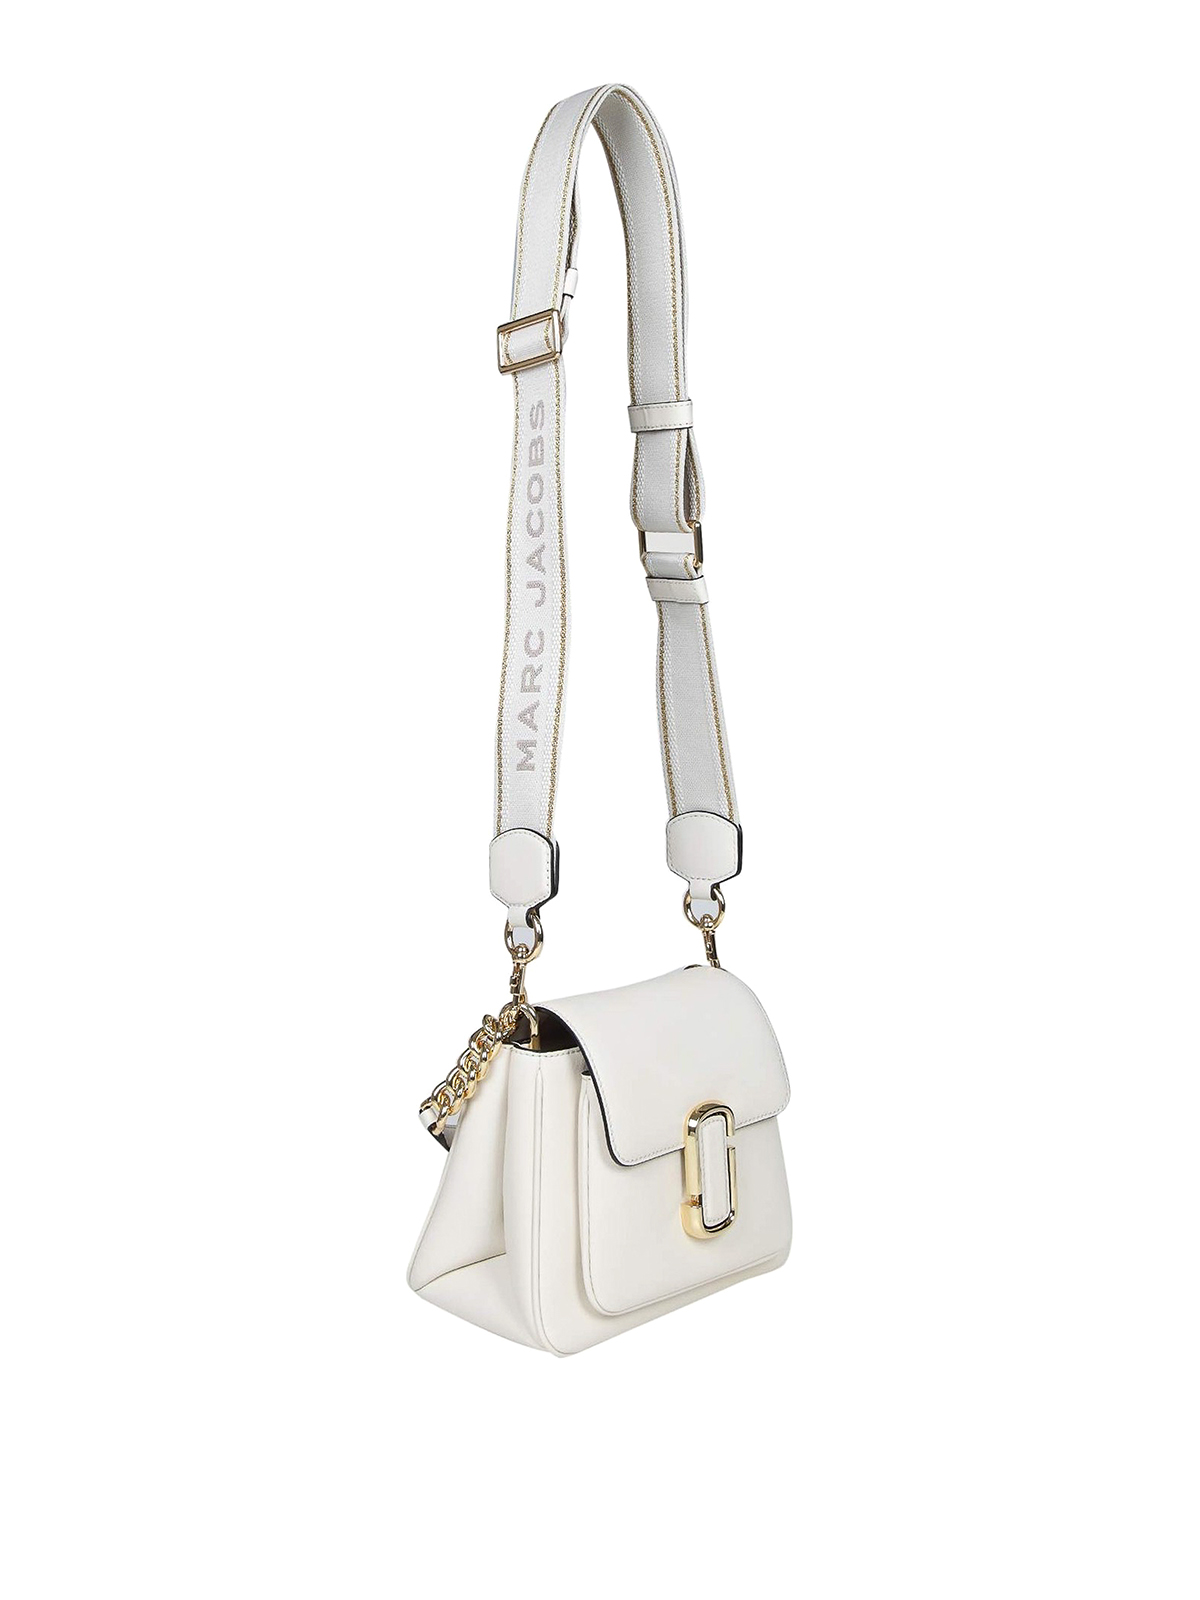 Marc Jacobs The Mini Chain Satchel Bag